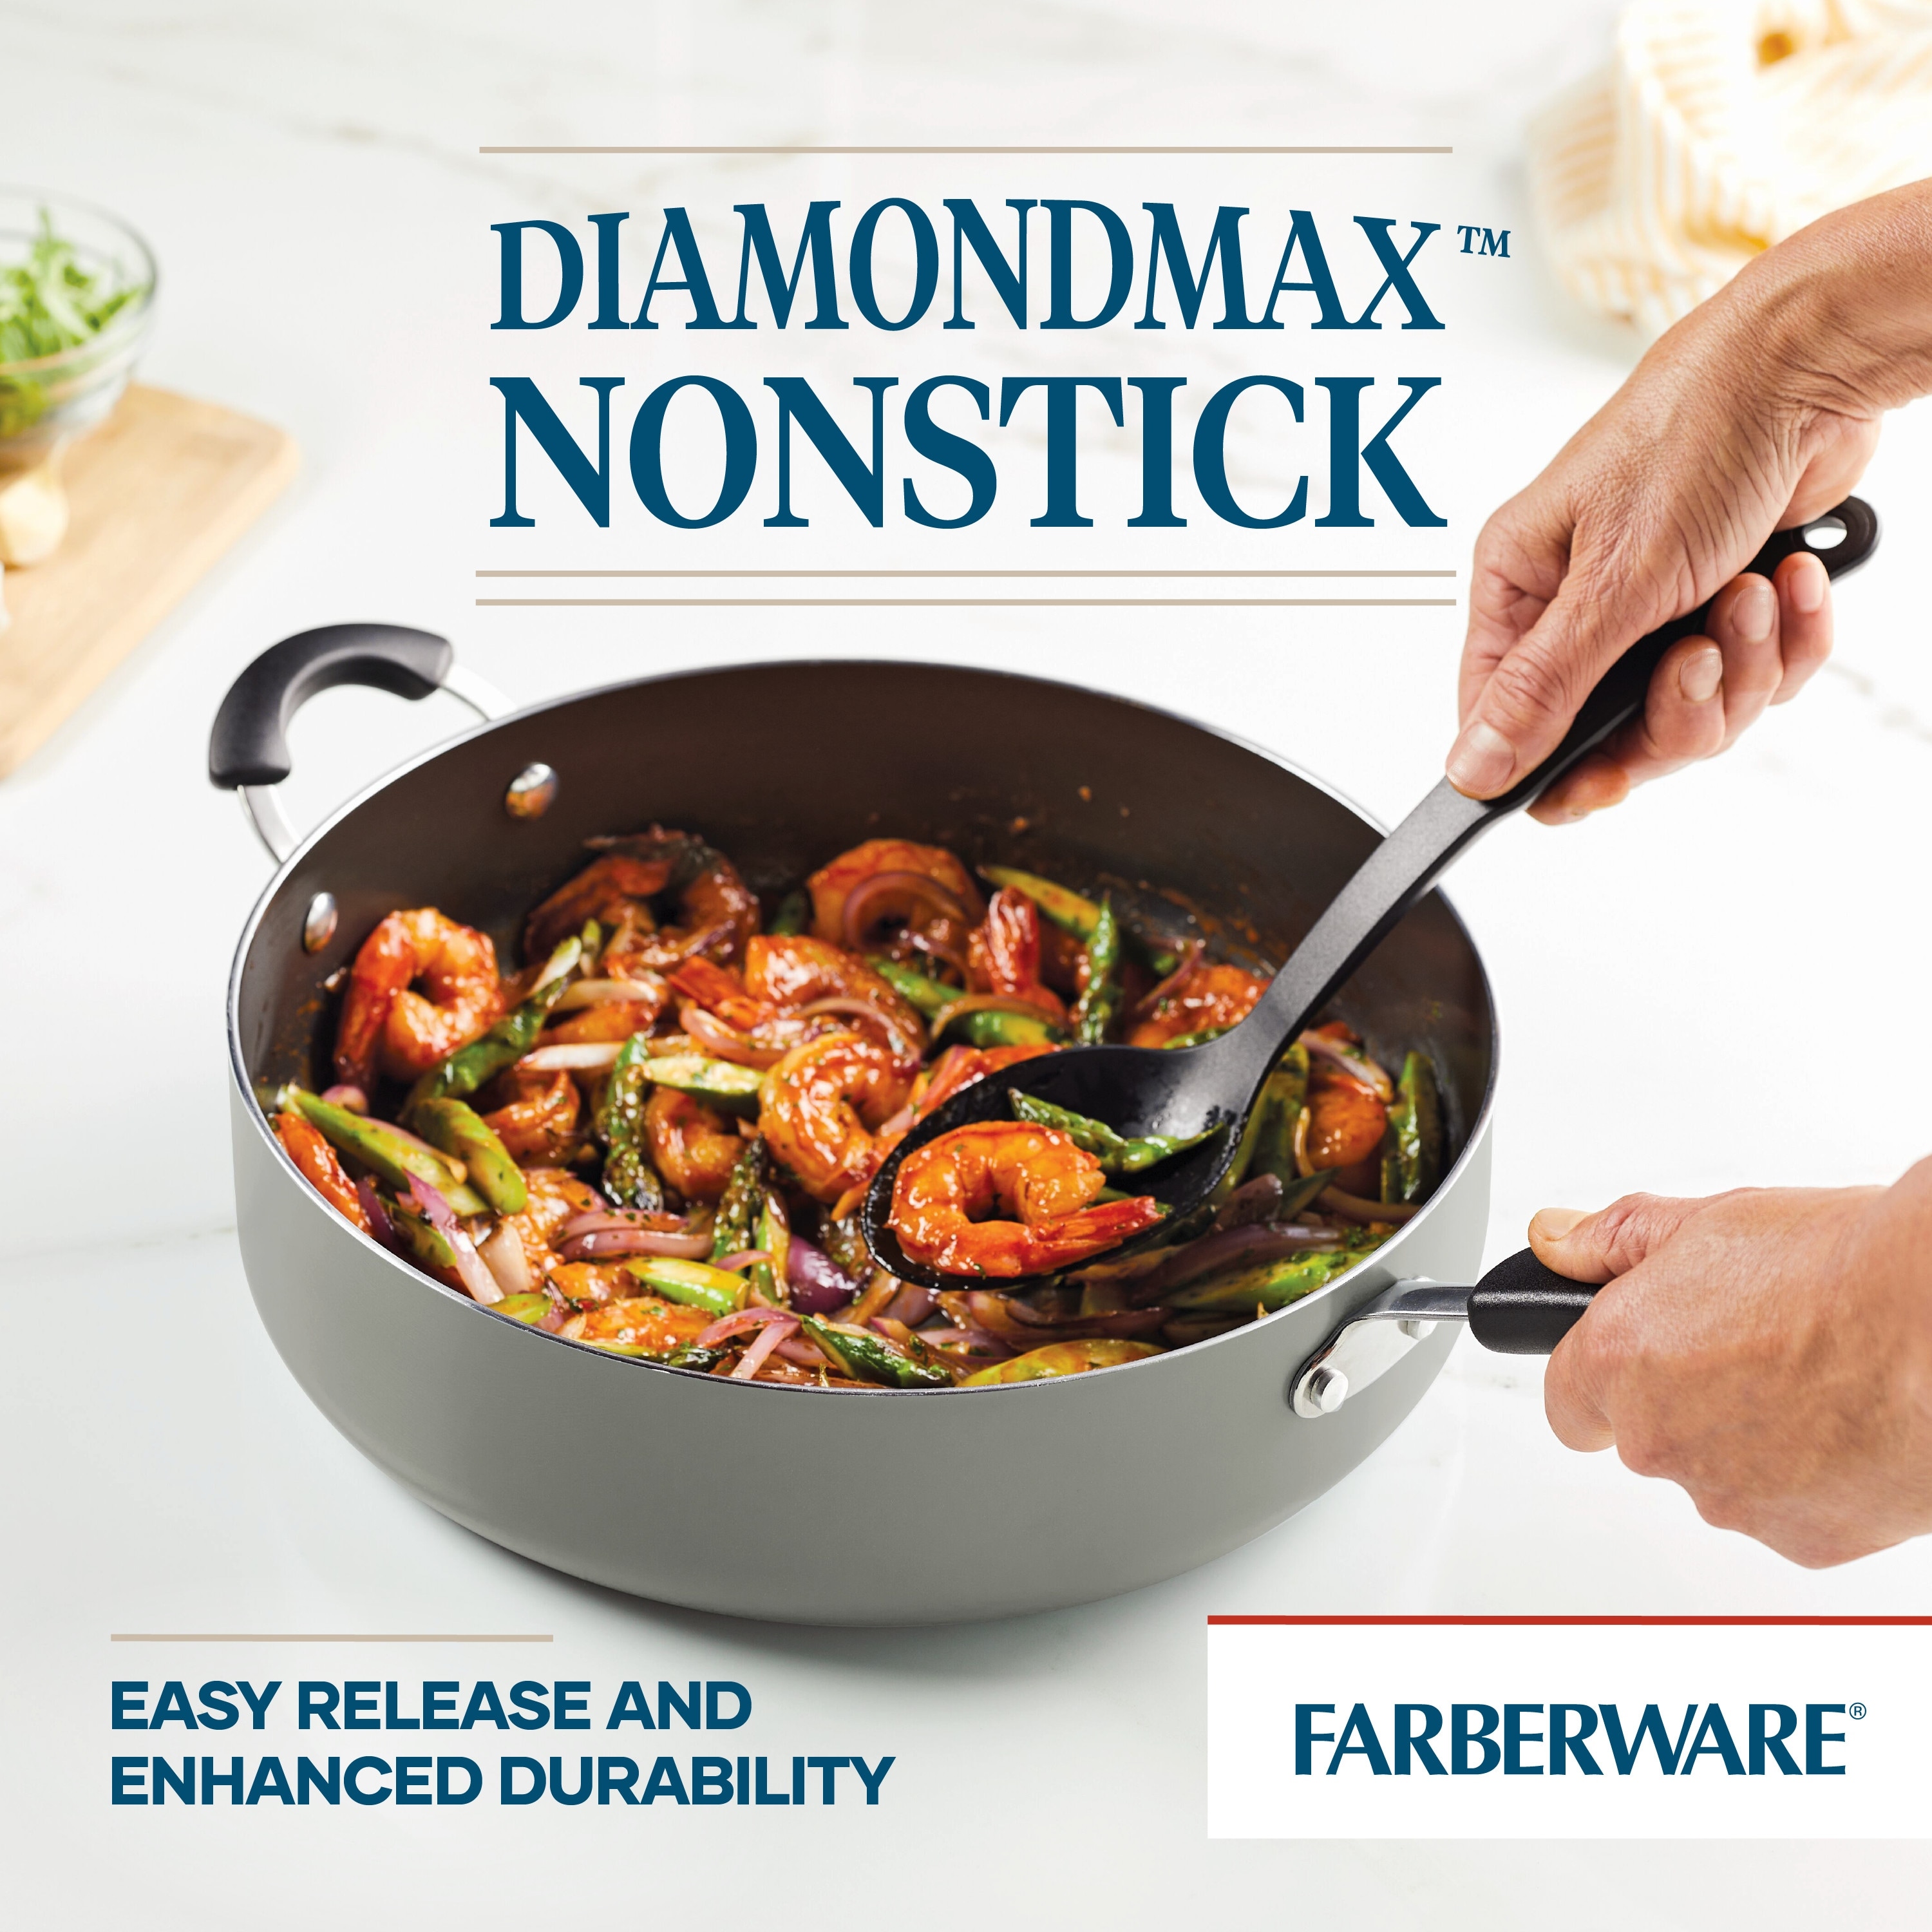 Farberware Cookstart 15-Pc. DiamondMax Nonstick Cookware Set Black